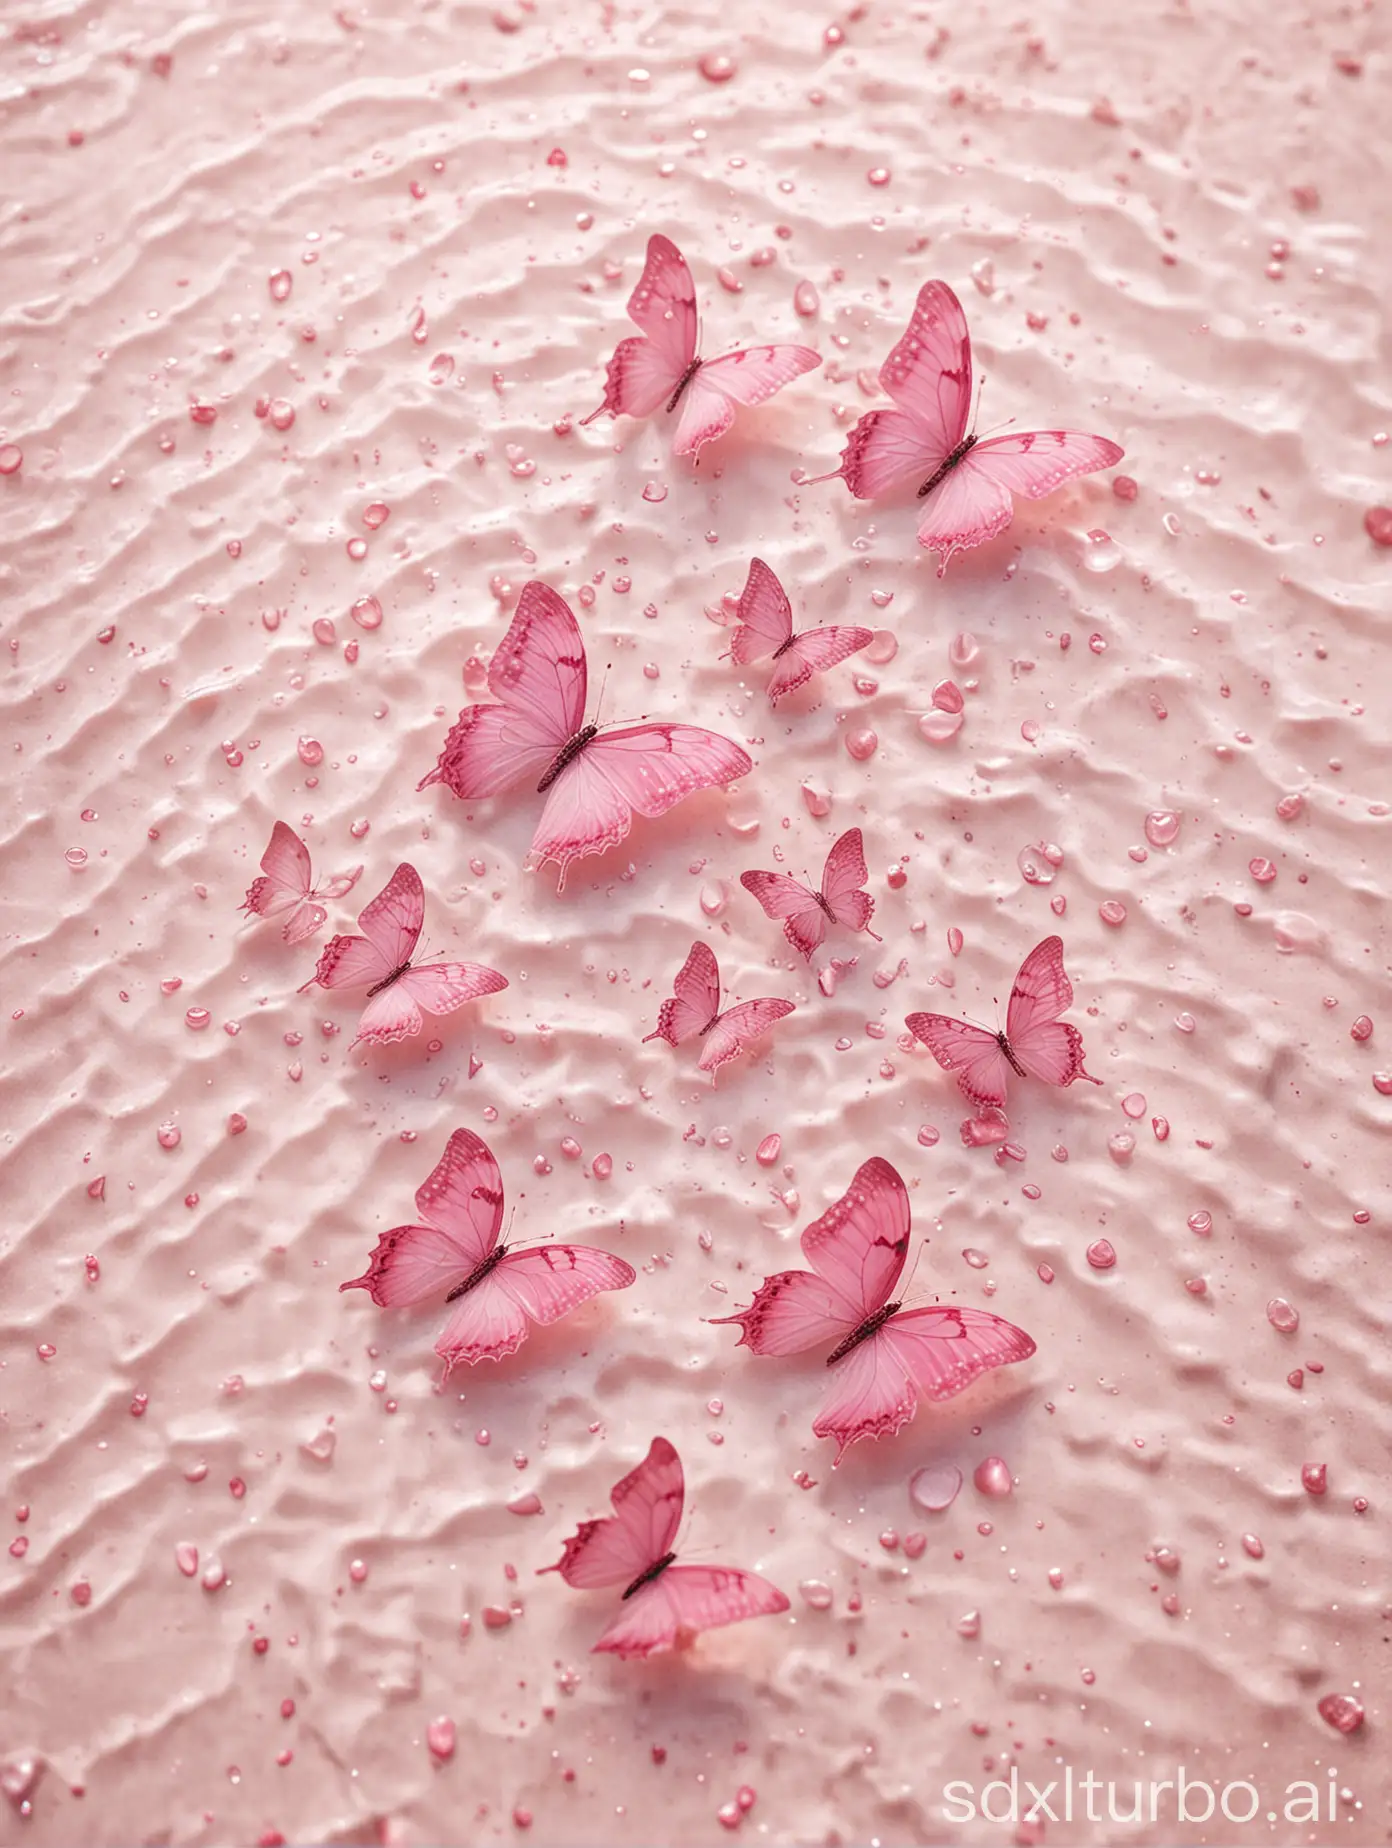 Transparent-Pink-Butterflies-Fluttering-Over-White-Sand-Beach-Underwater